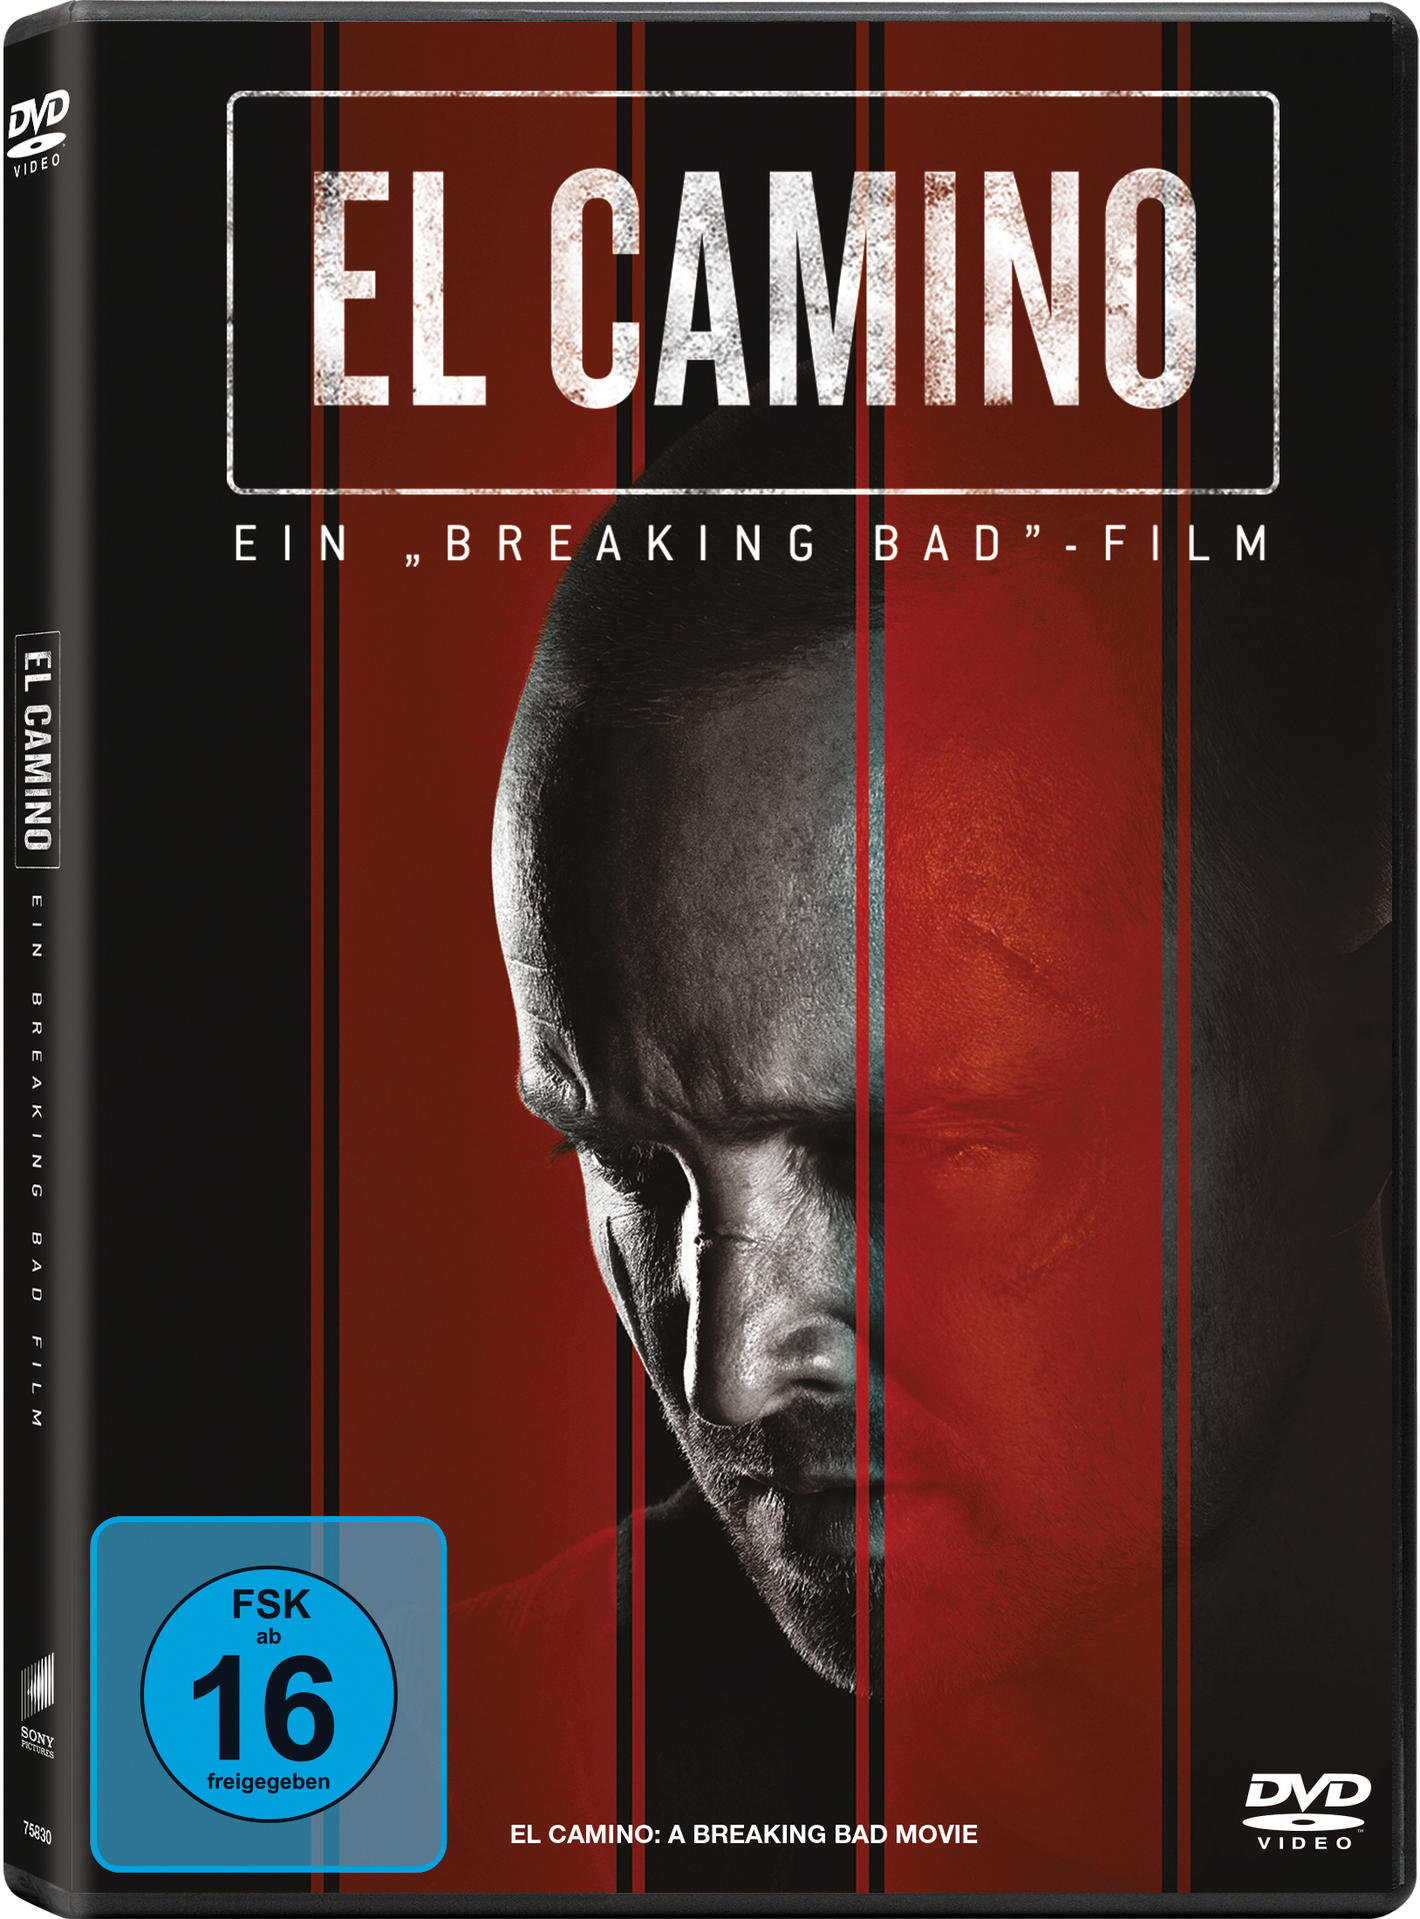 El Camino: Ein „Breaking DVD Bad”-Film